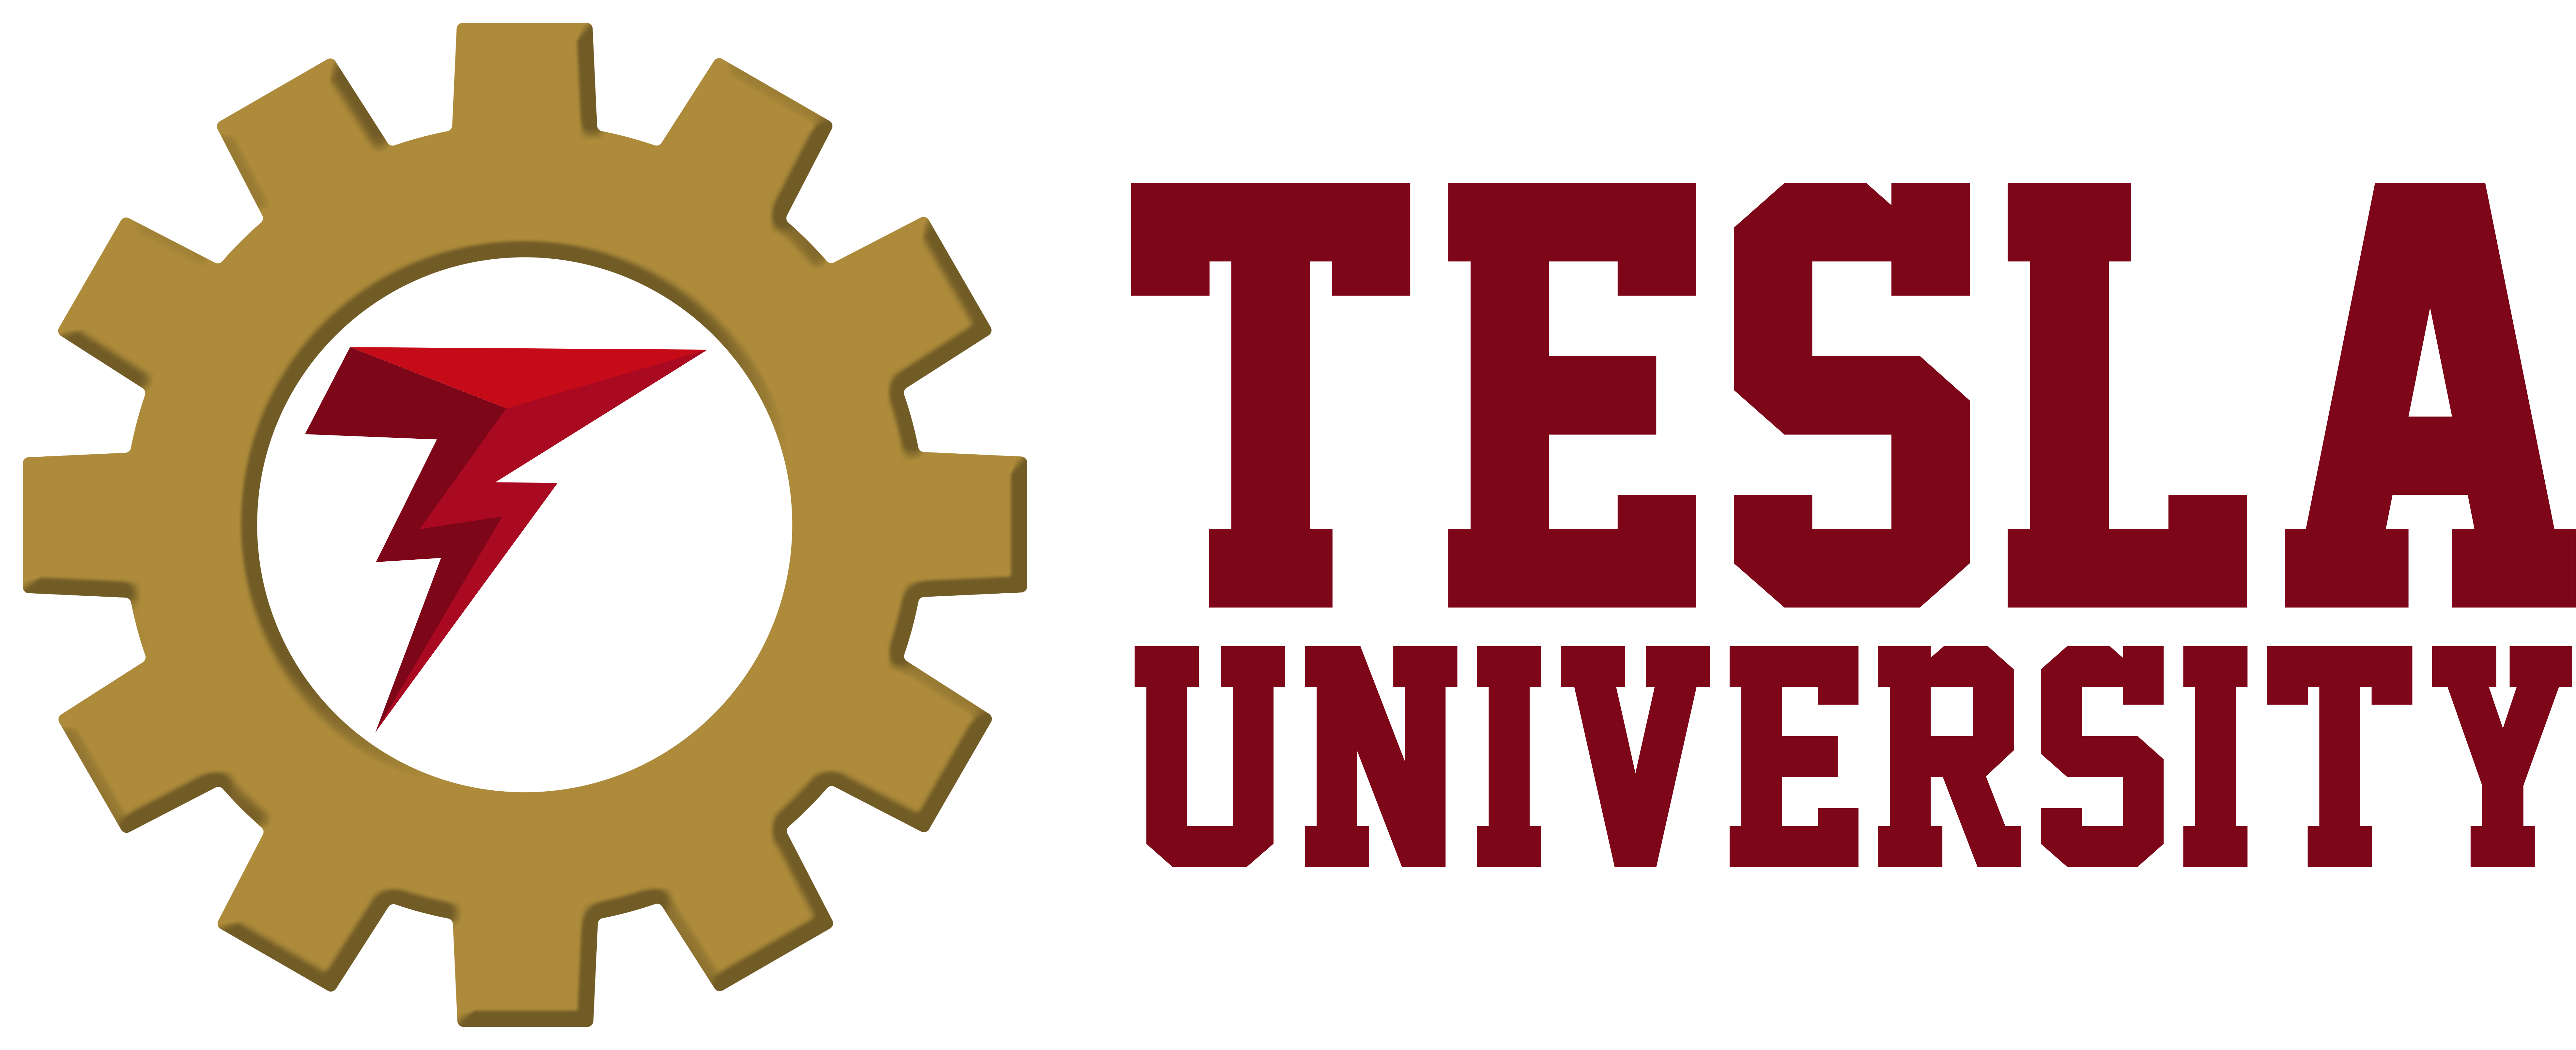 TESLA UNIVERSITY Logo